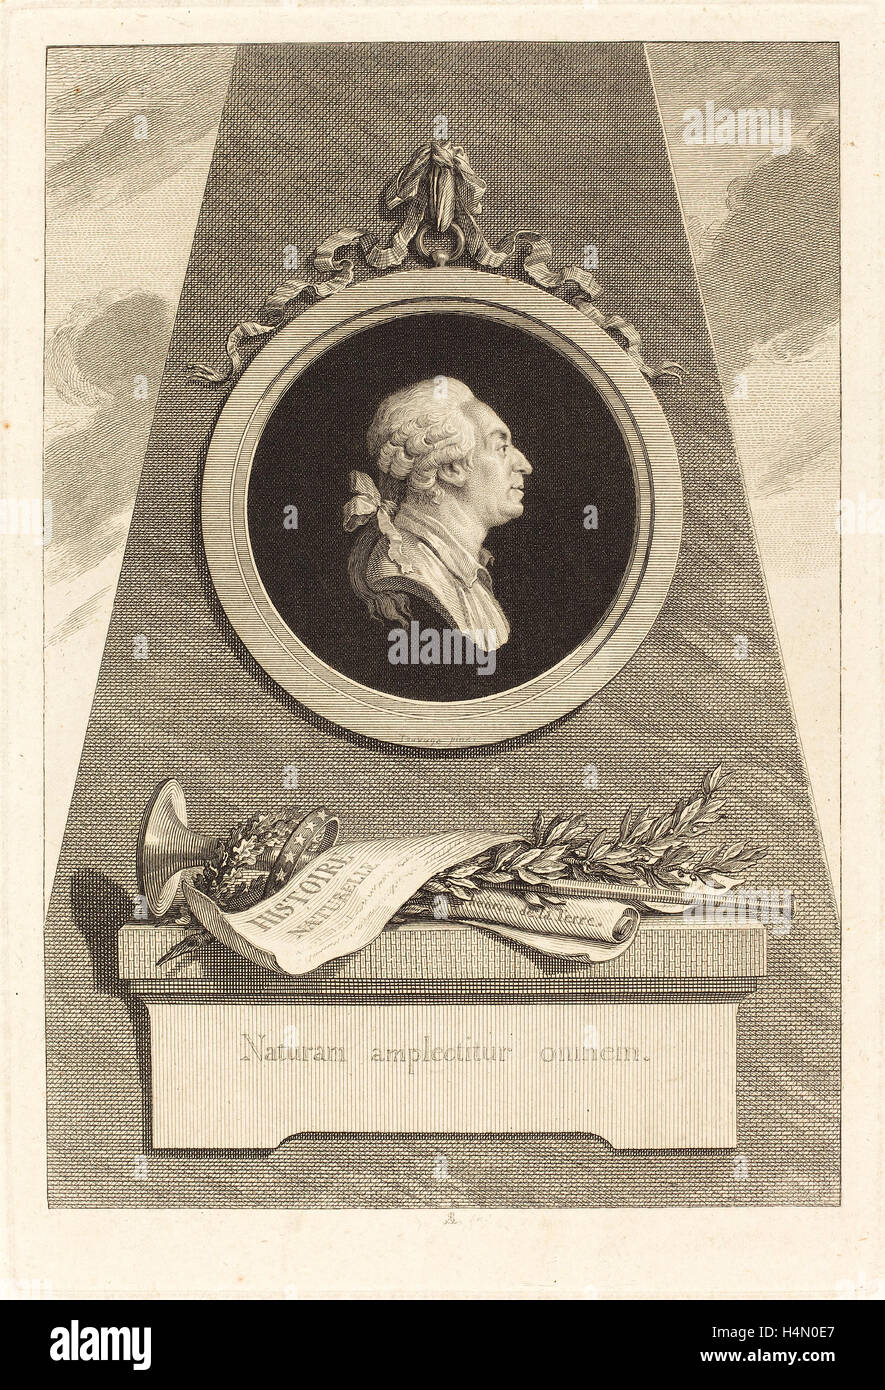 Augustin de Saint-Aubin nach Piat Joseph Sauvage (Französisch, 1736-1807), Comte de Buffon, 1798, Gravur über Ätzen Stockfoto